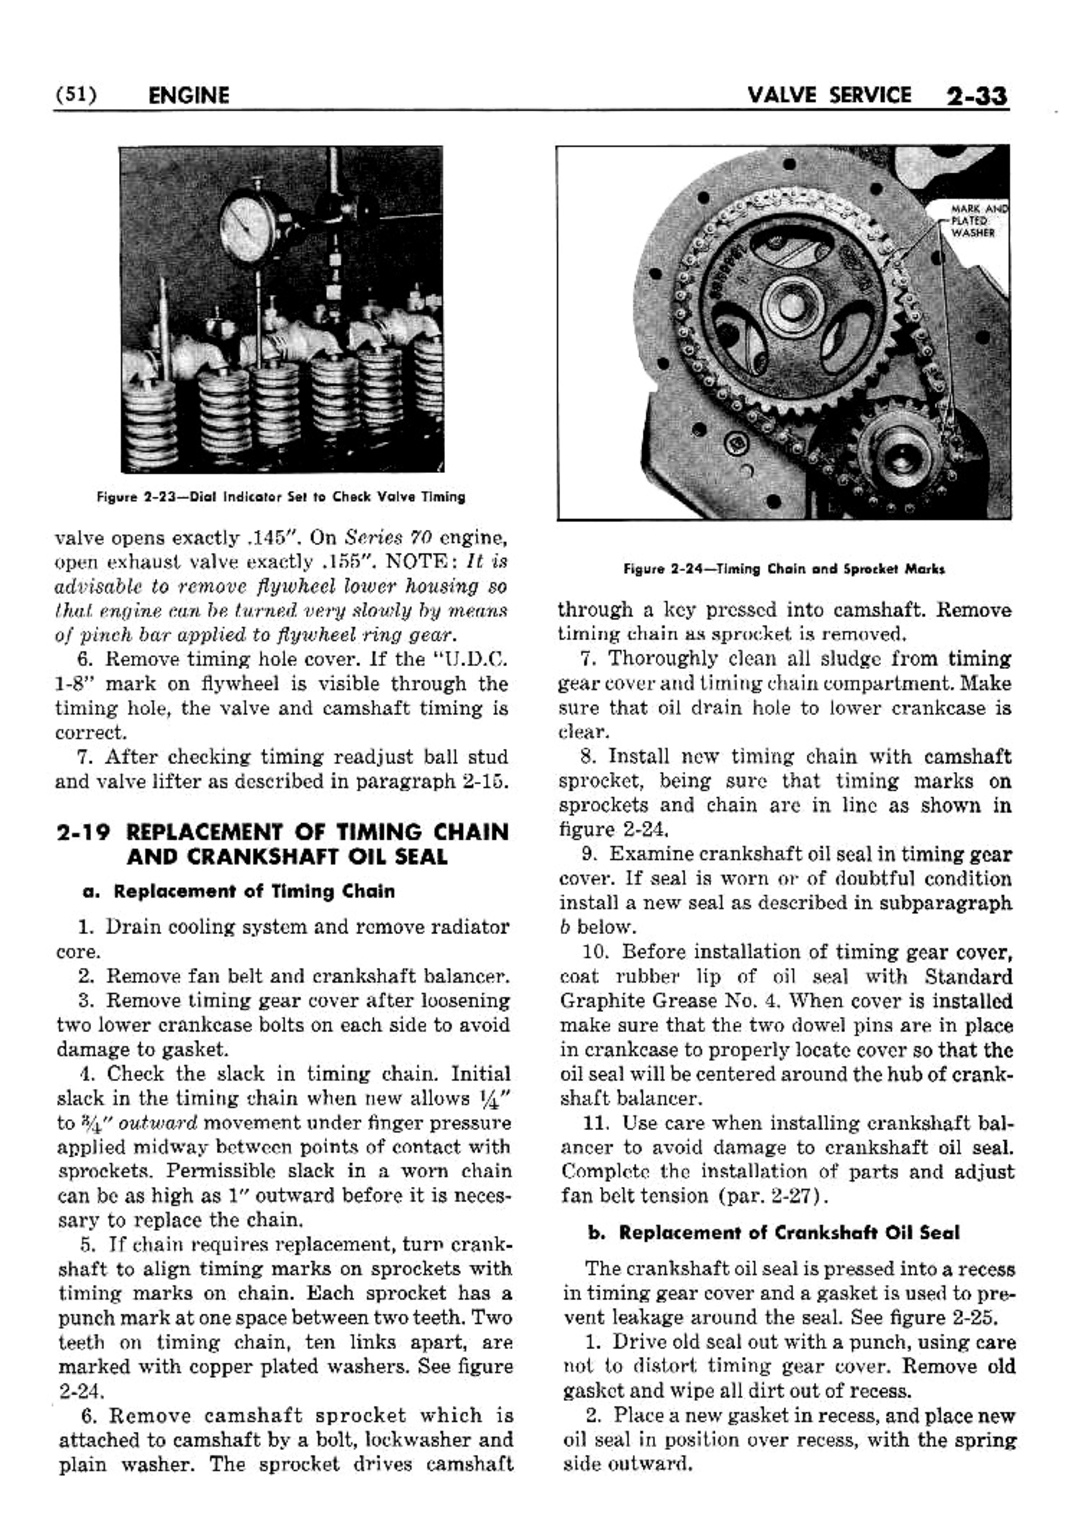 n_03 1952 Buick Shop Manual - Engine-033-033.jpg